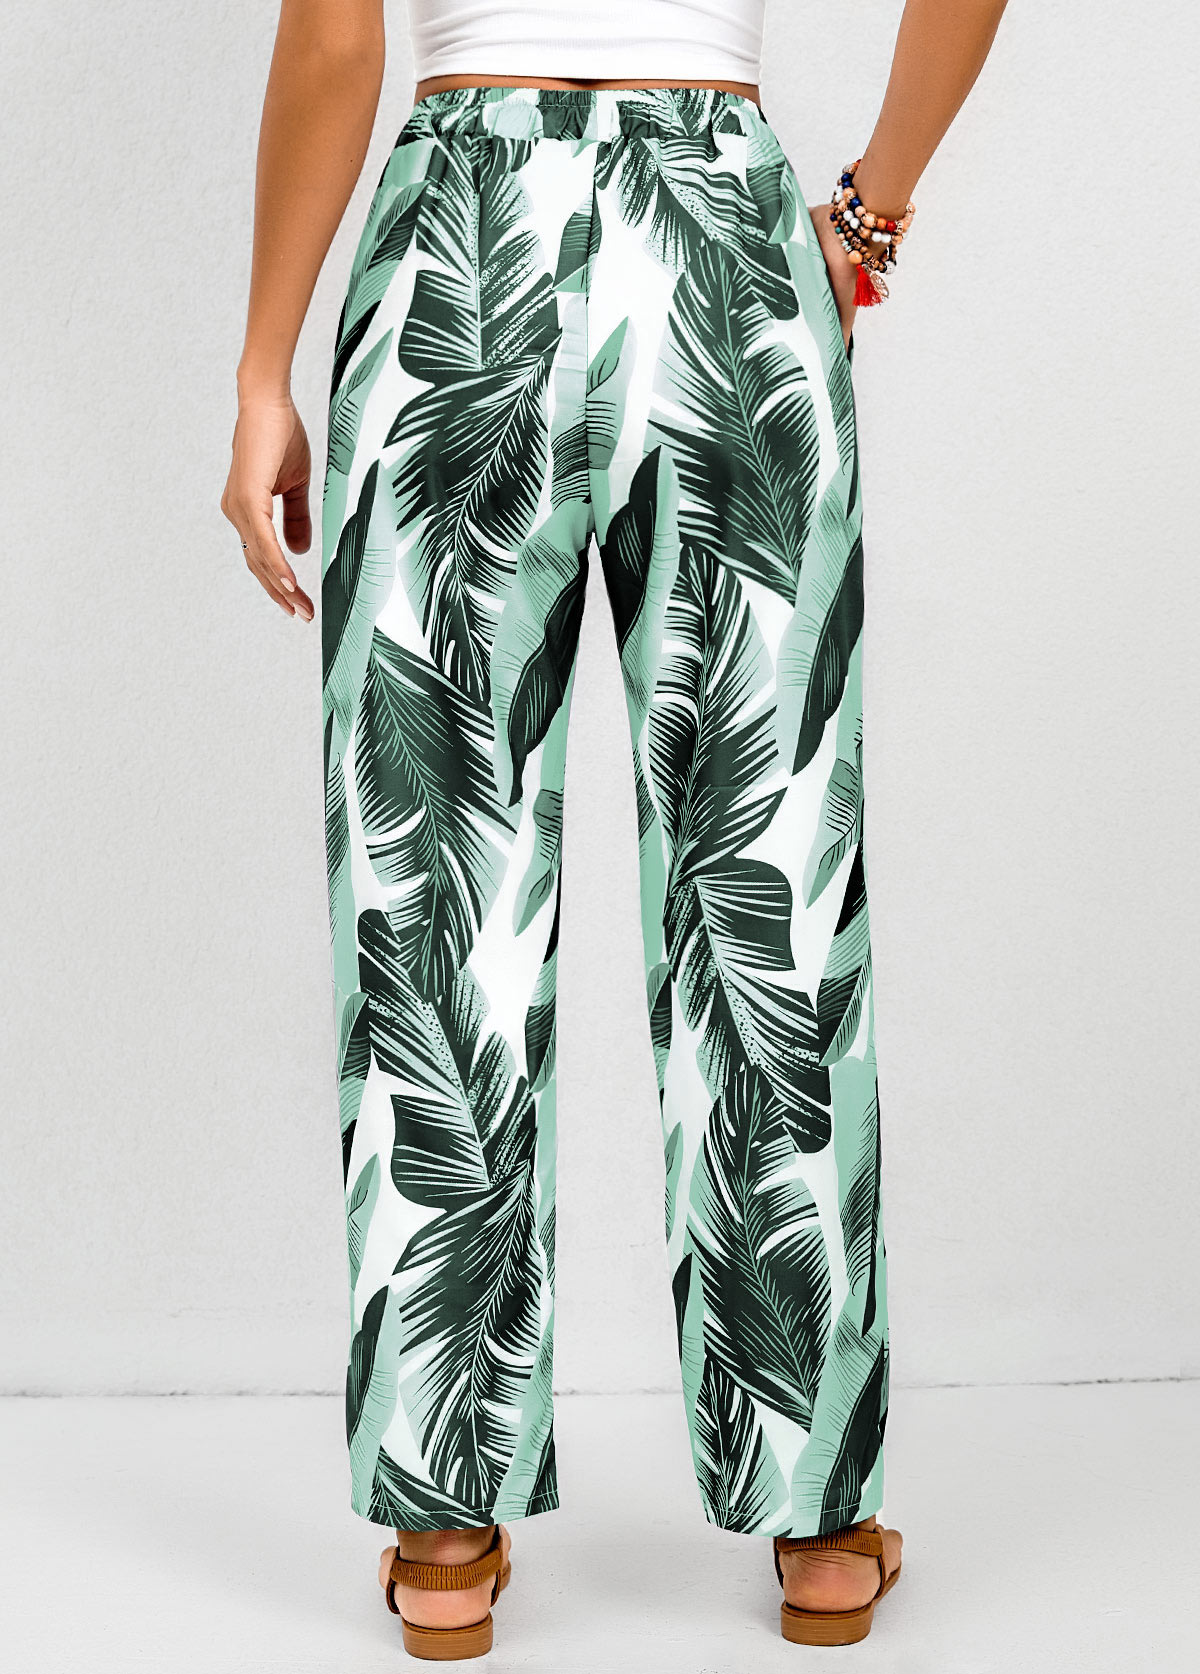 Green Pocket Feathers Print Elastic Waist High Waisted Pants